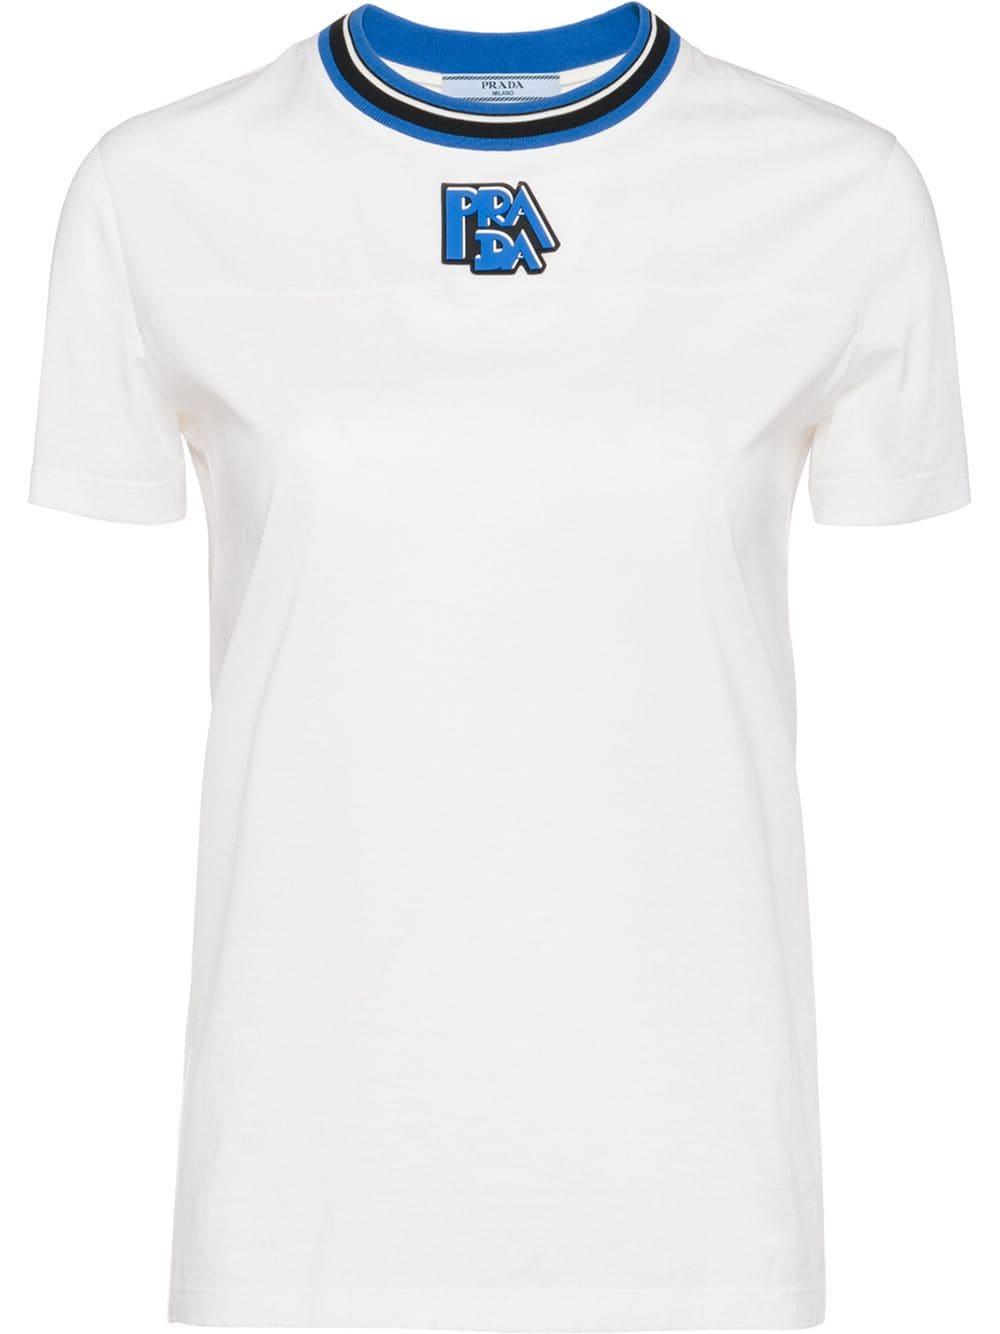 Prada Rubber Logo T-shirt in White - Save 51% - Lyst